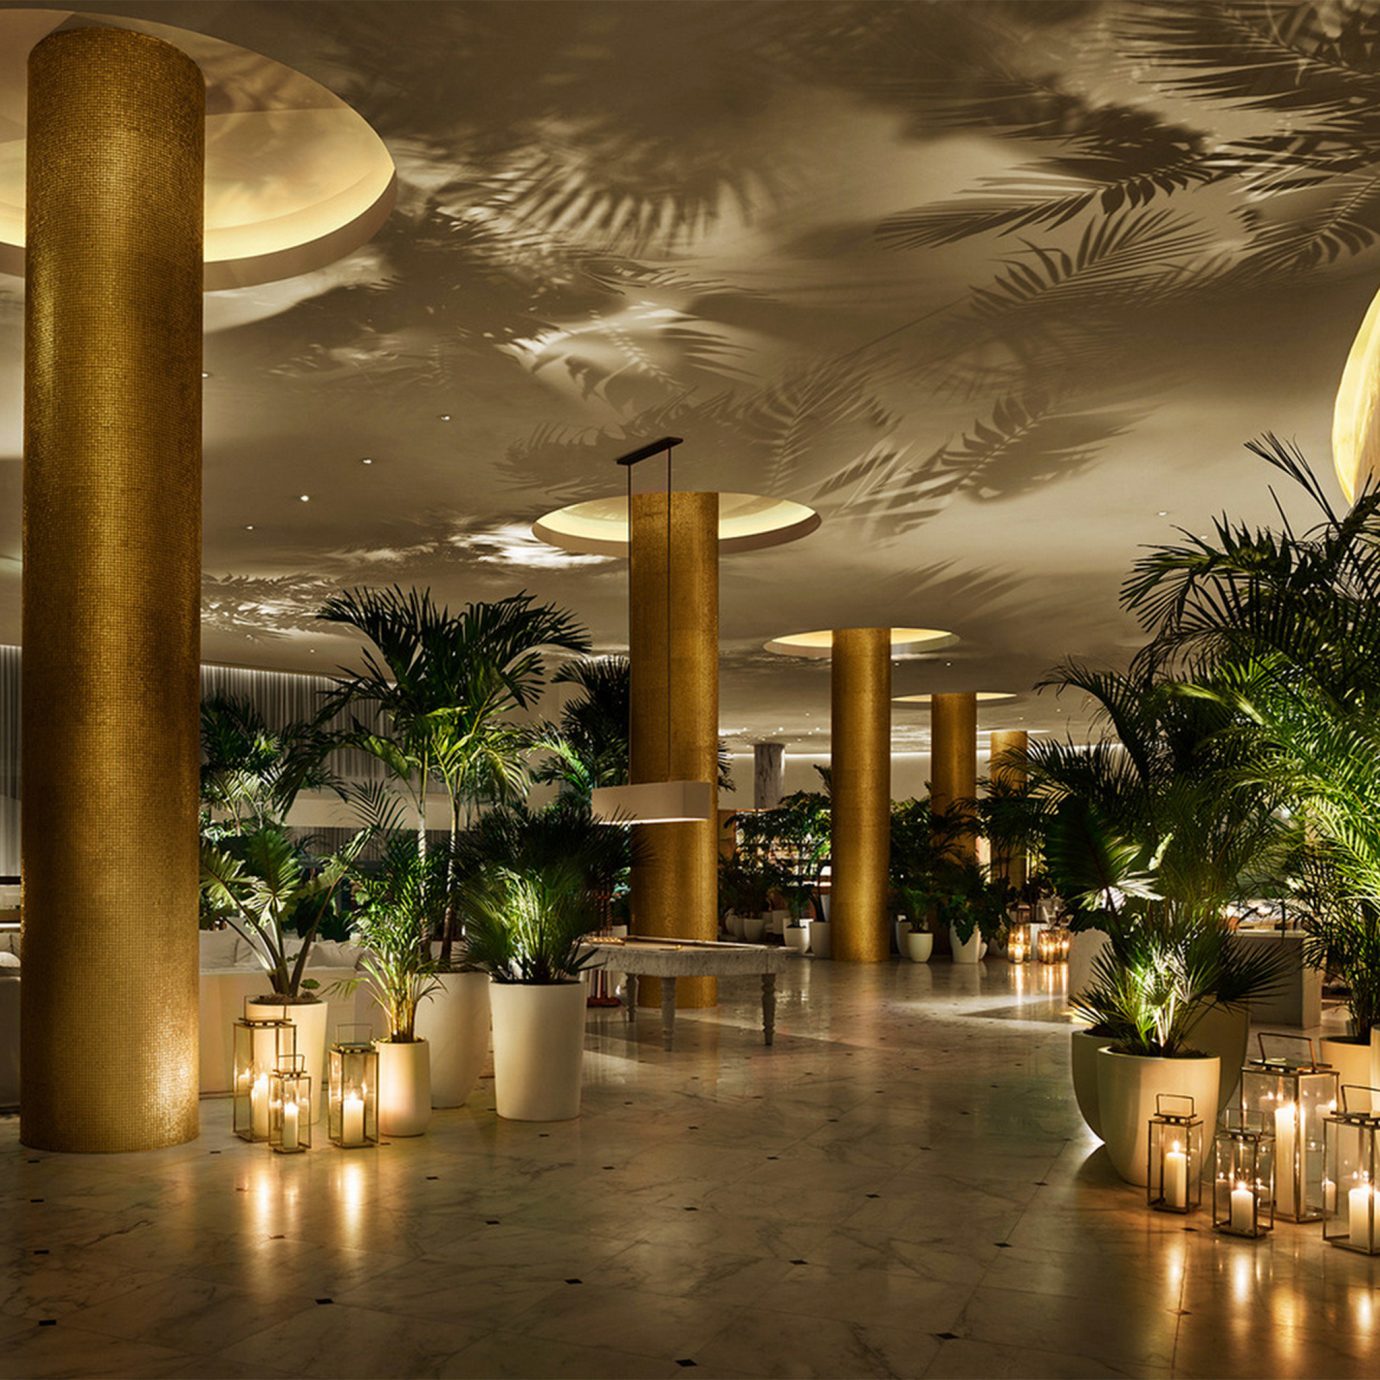 Lobby night lighting restaurant arecales evening Resort landscape lighting